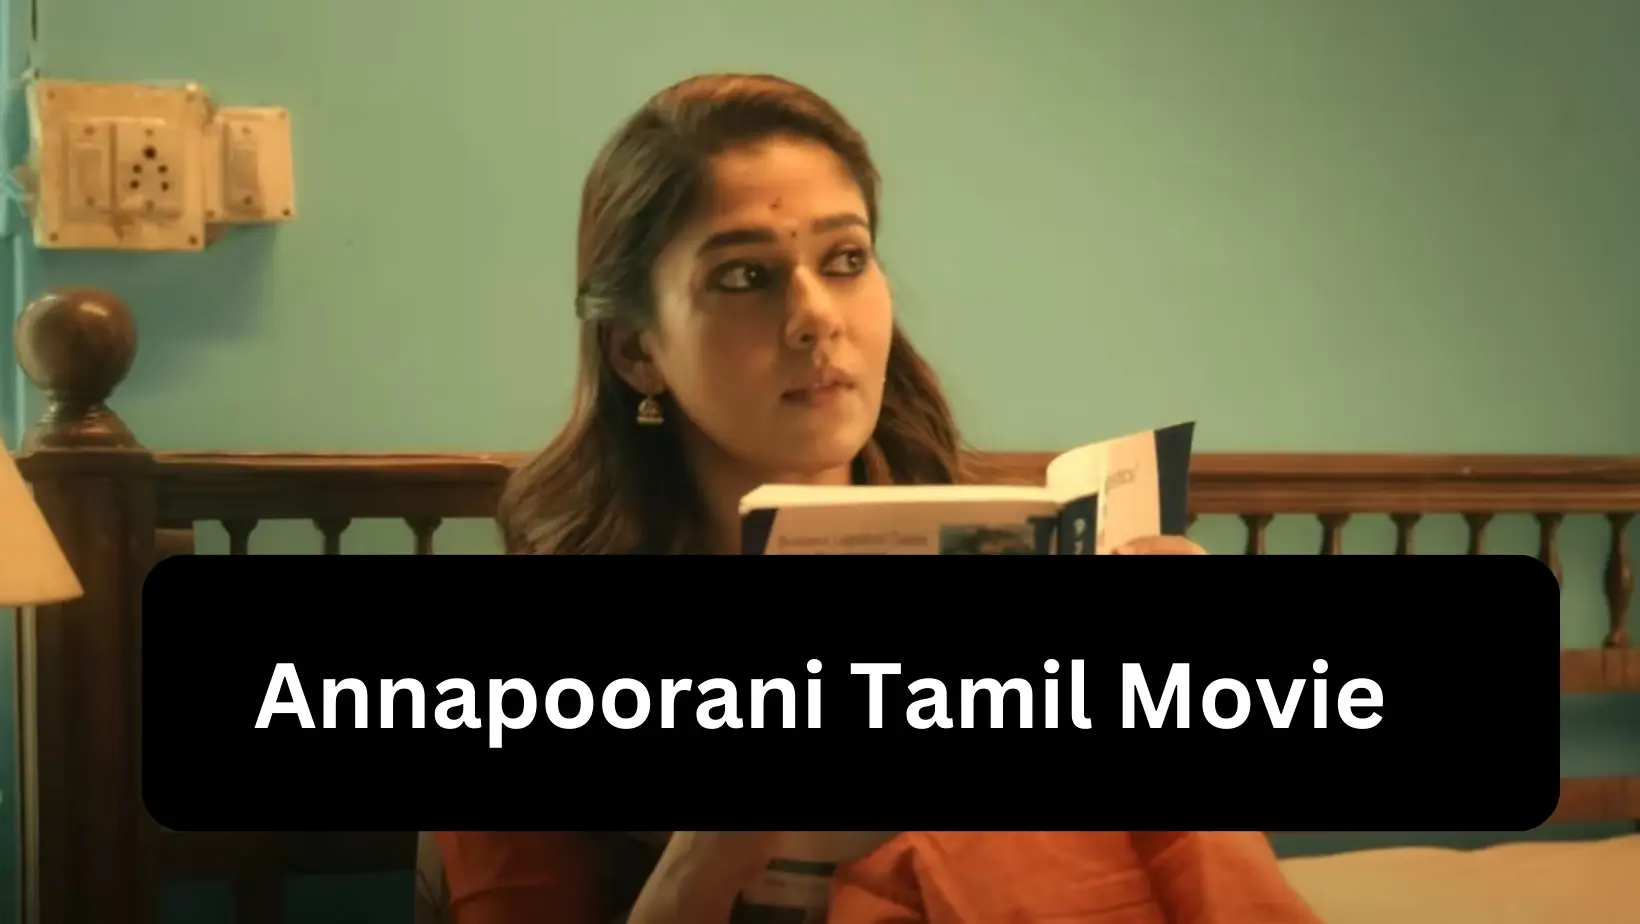 Annapoorani Tamil Movie